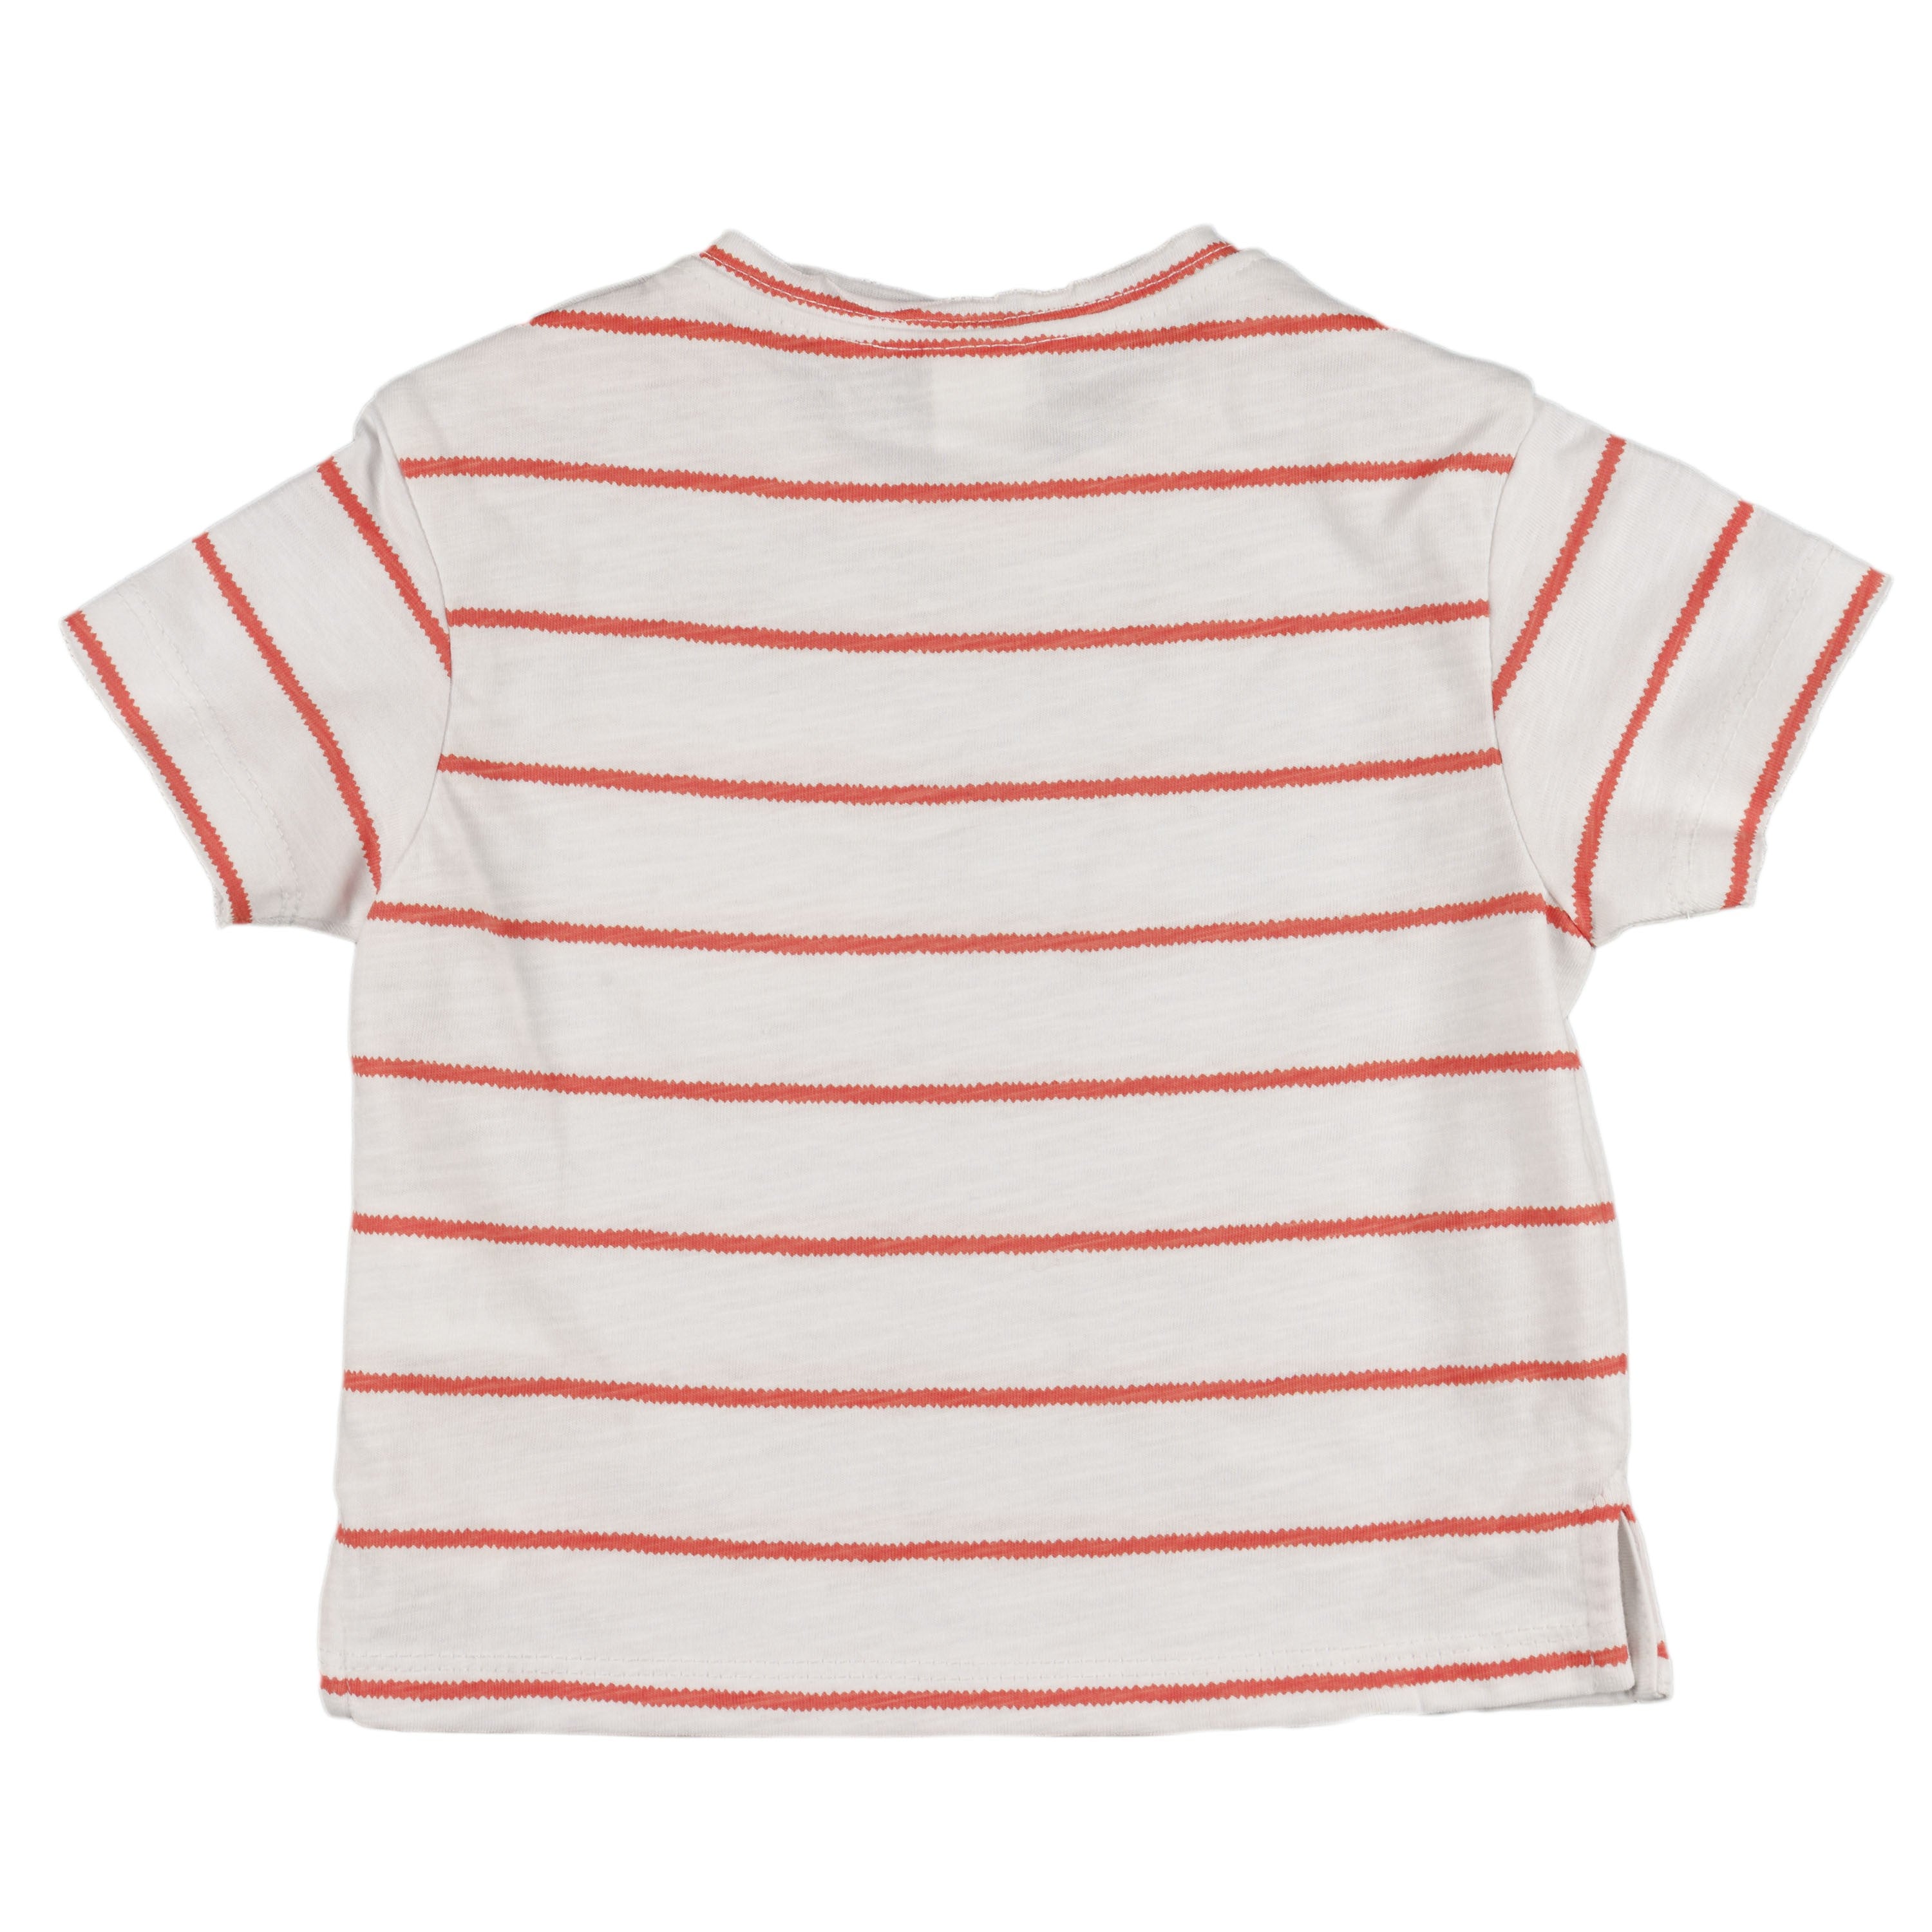 Camiseta de bebé coral VERANO/Outlet